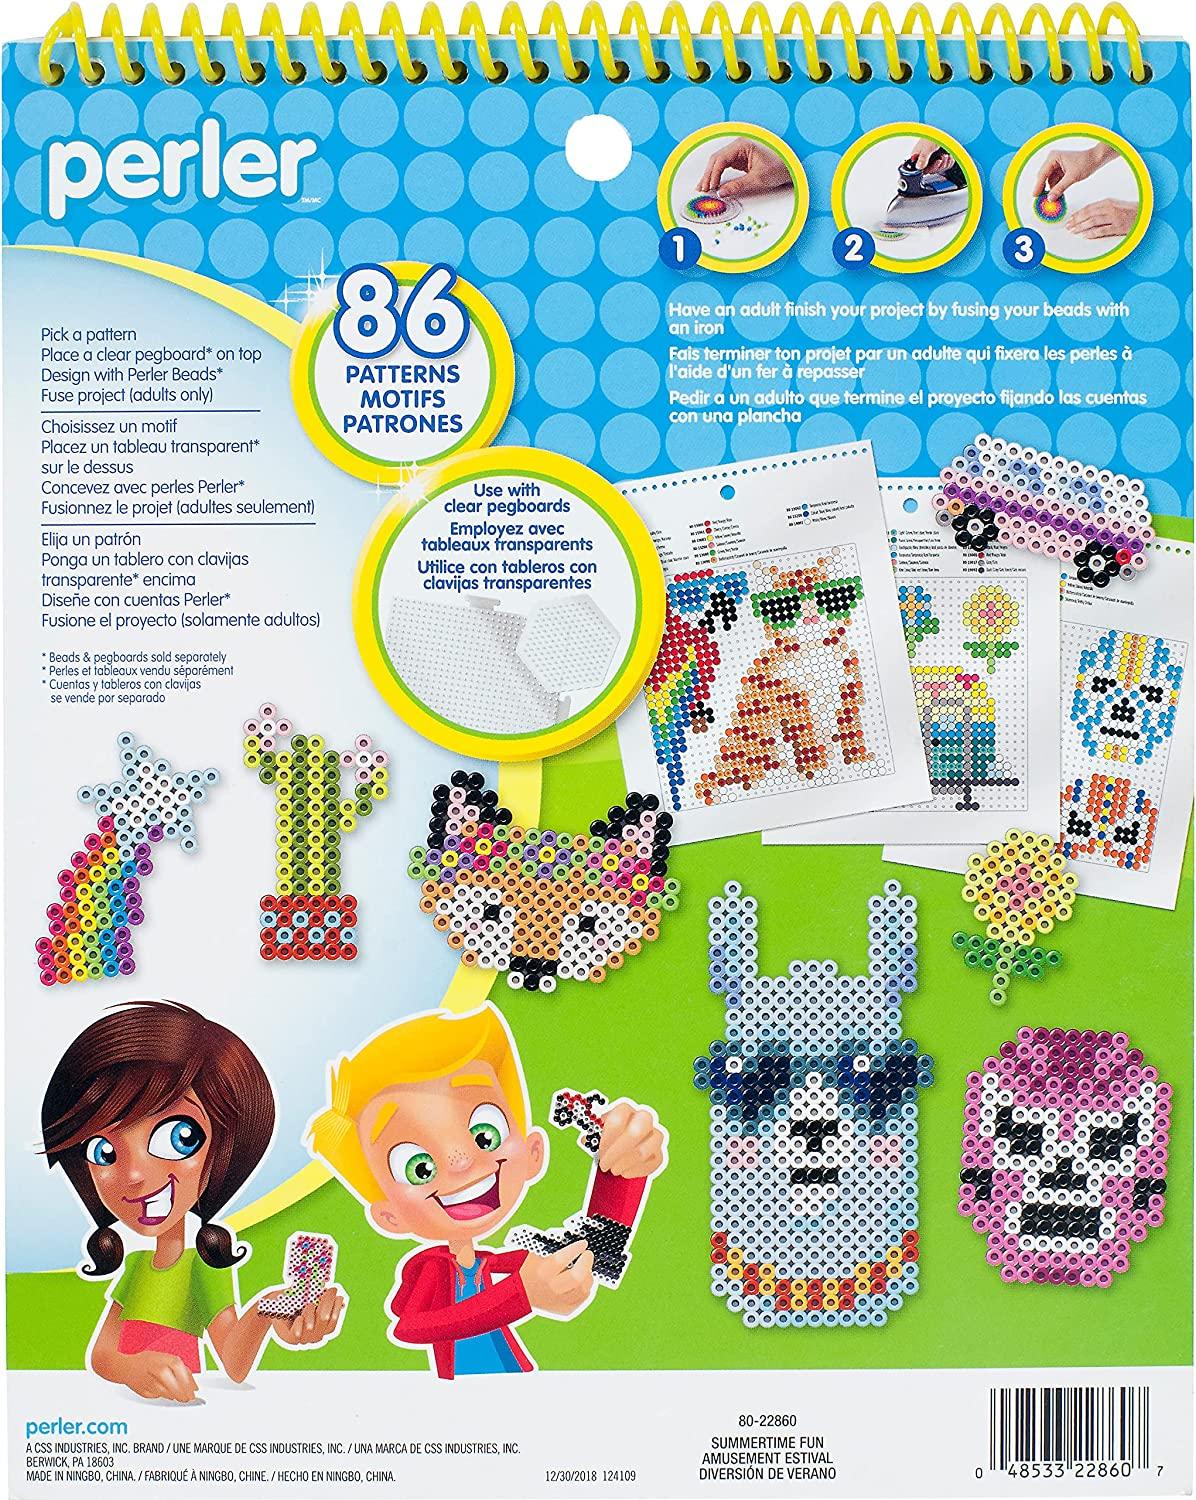 Baby Unicorn Perler Bead Patterns - That Kids' Craft Site